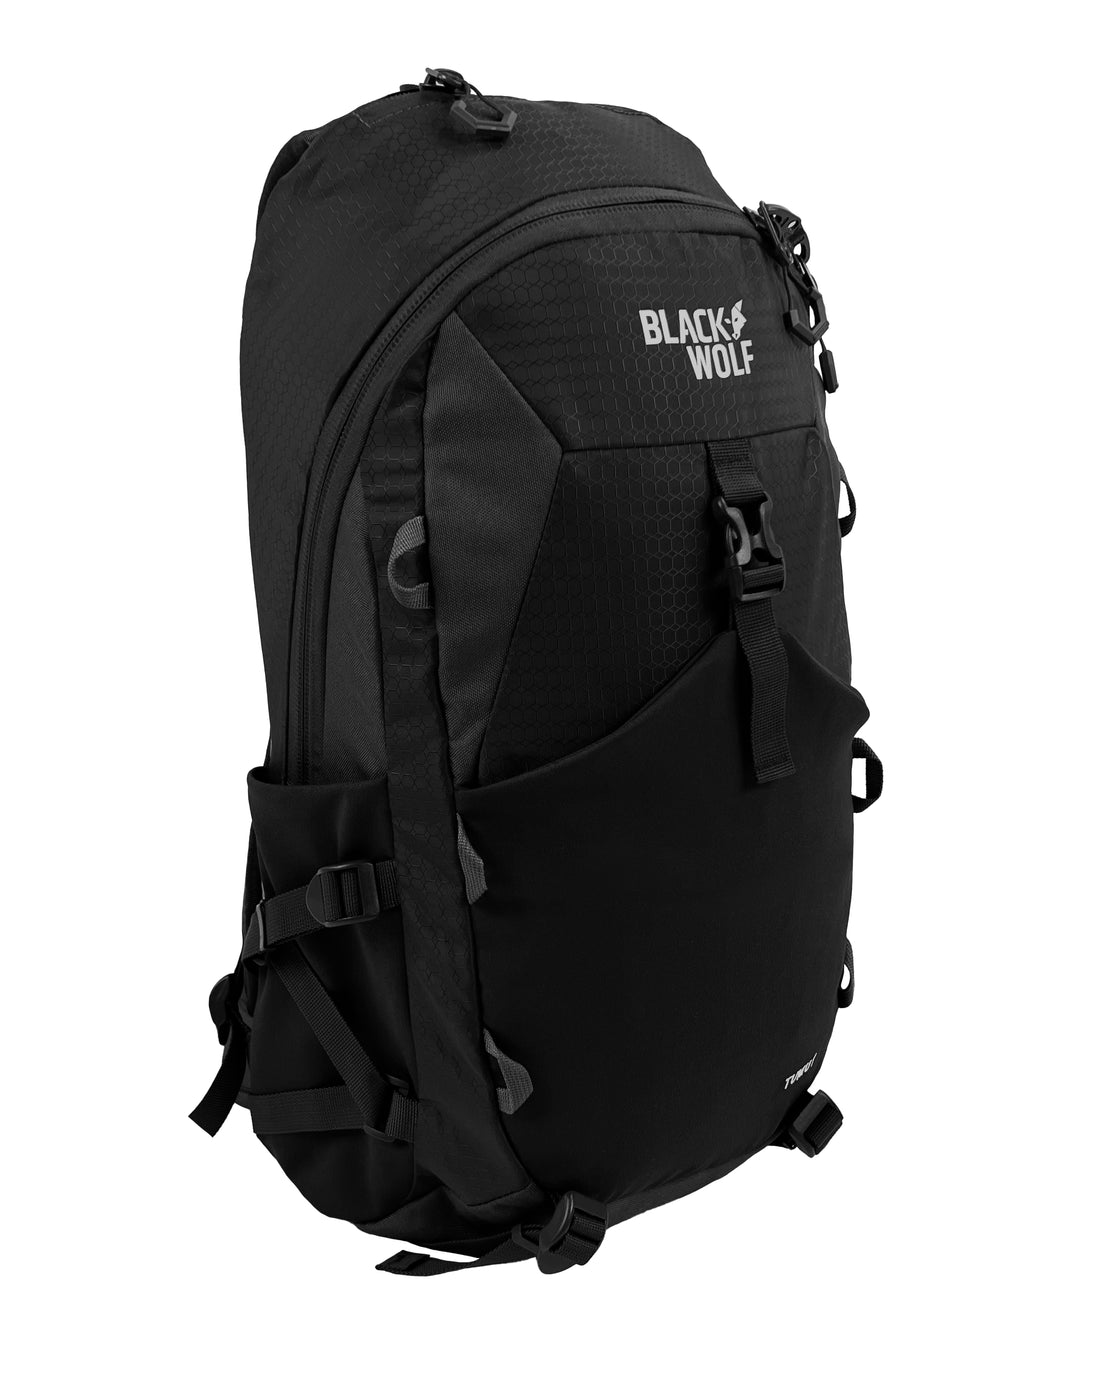 Black Wolf - Tumut 25L Backpack - Jet Black - 0